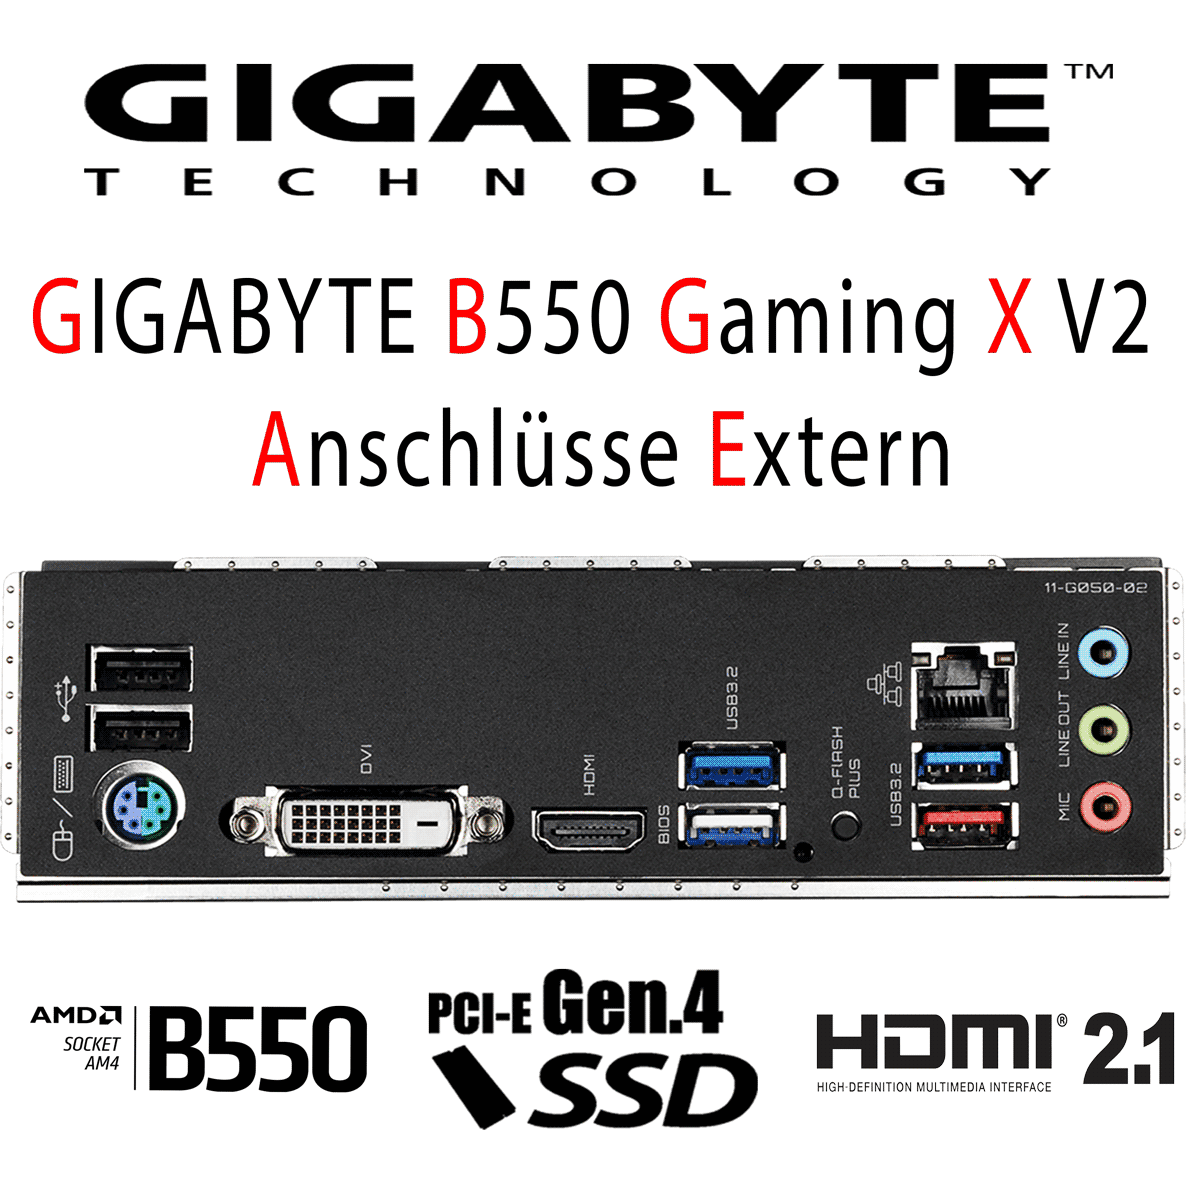 PC Bundle • AMD Ryzen 7 5800X • GIGABYTE B550 Gaming X V2 • 16GB DDR4-3200 Ram